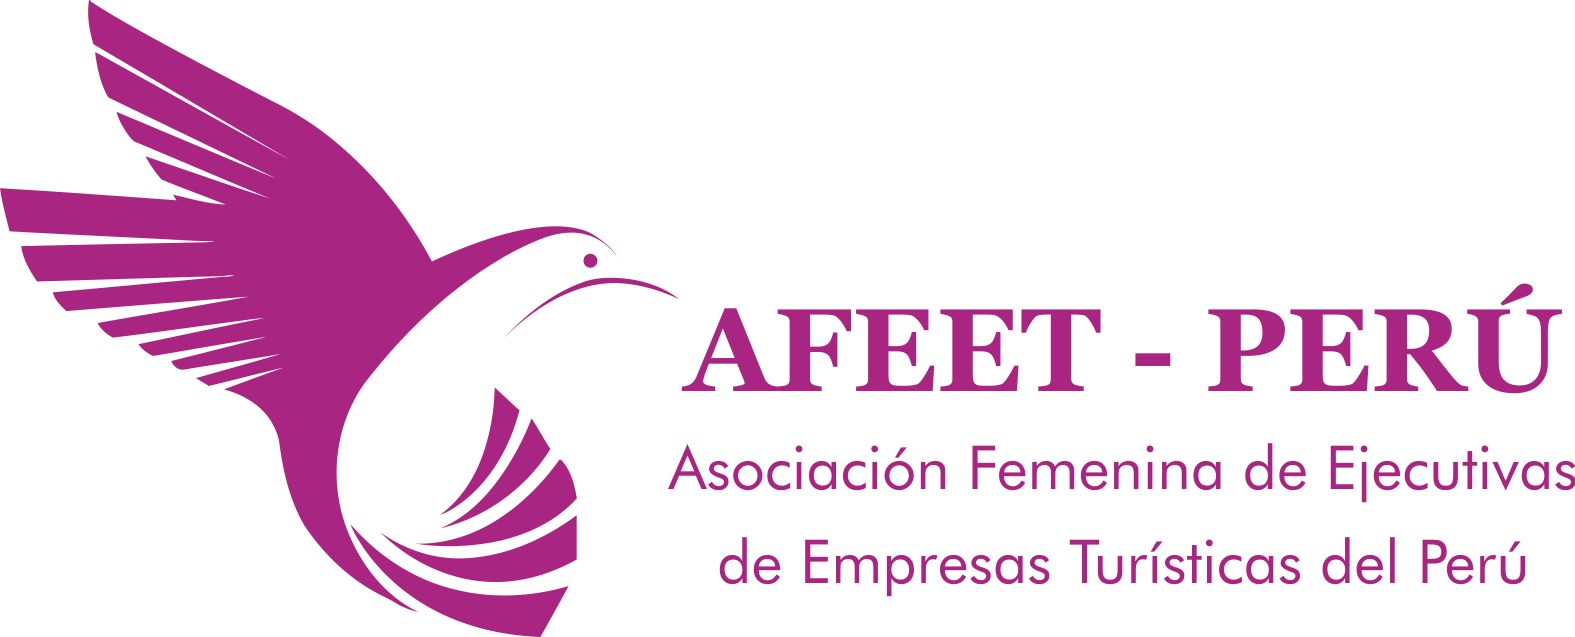 Afeet Perú logo